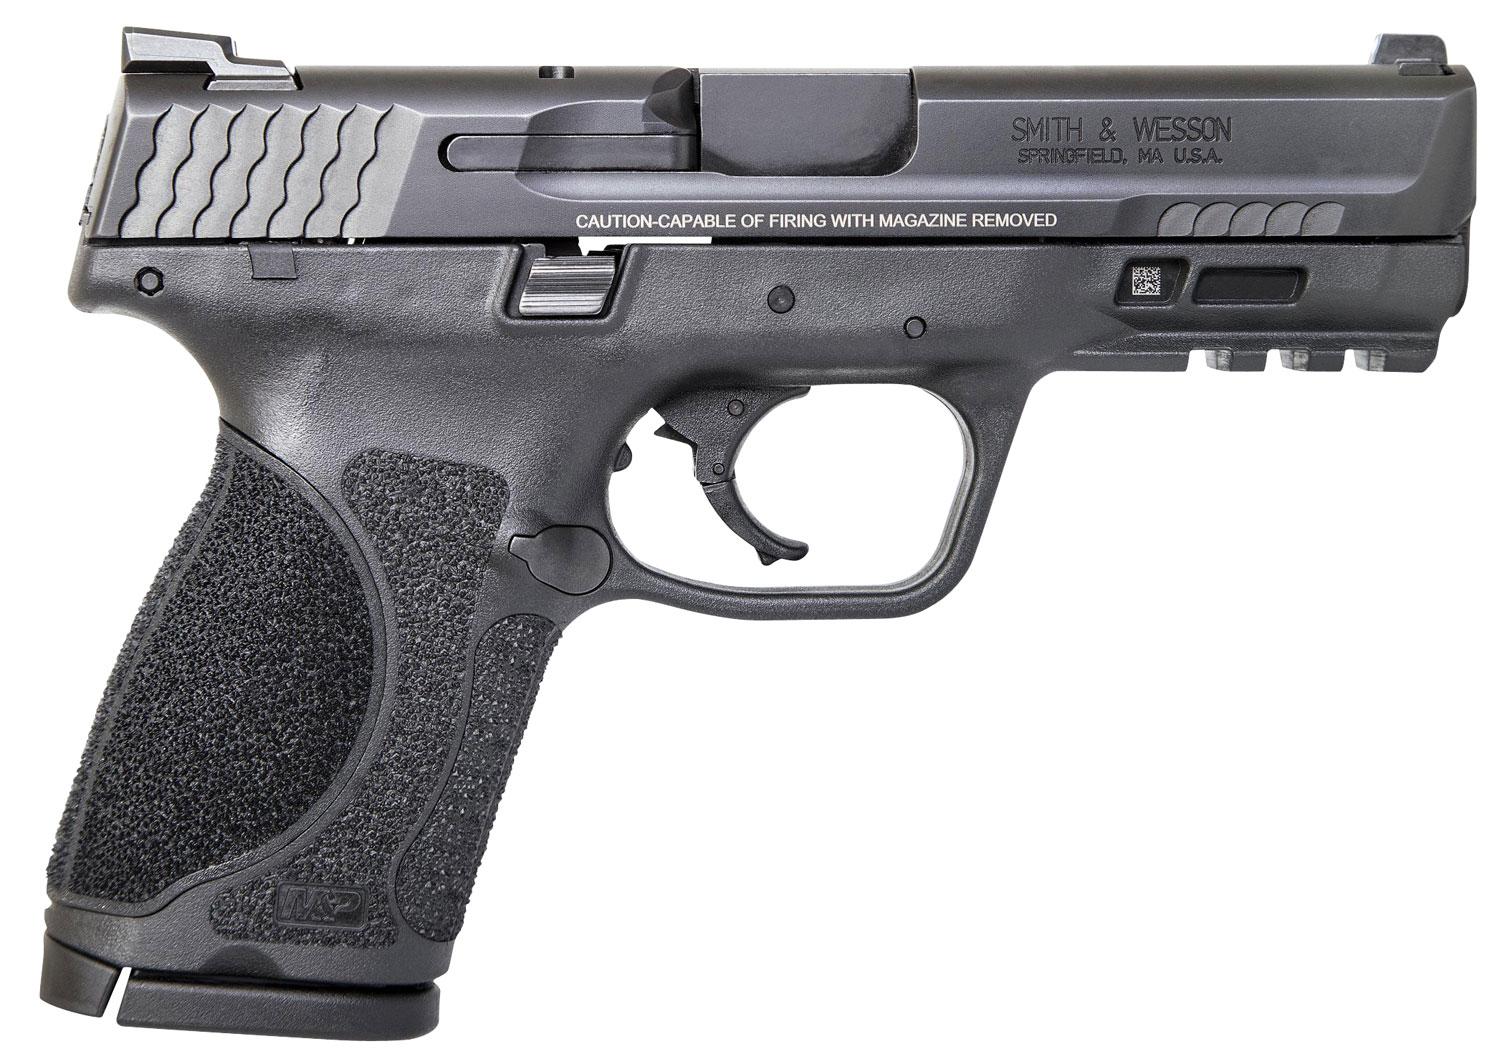 Smith & Wesson M&P M2.0 Pistol 11683, 9mm Luger, 4", Black Interchangeable Backstrap Grips, Black Finish, 15 Rd